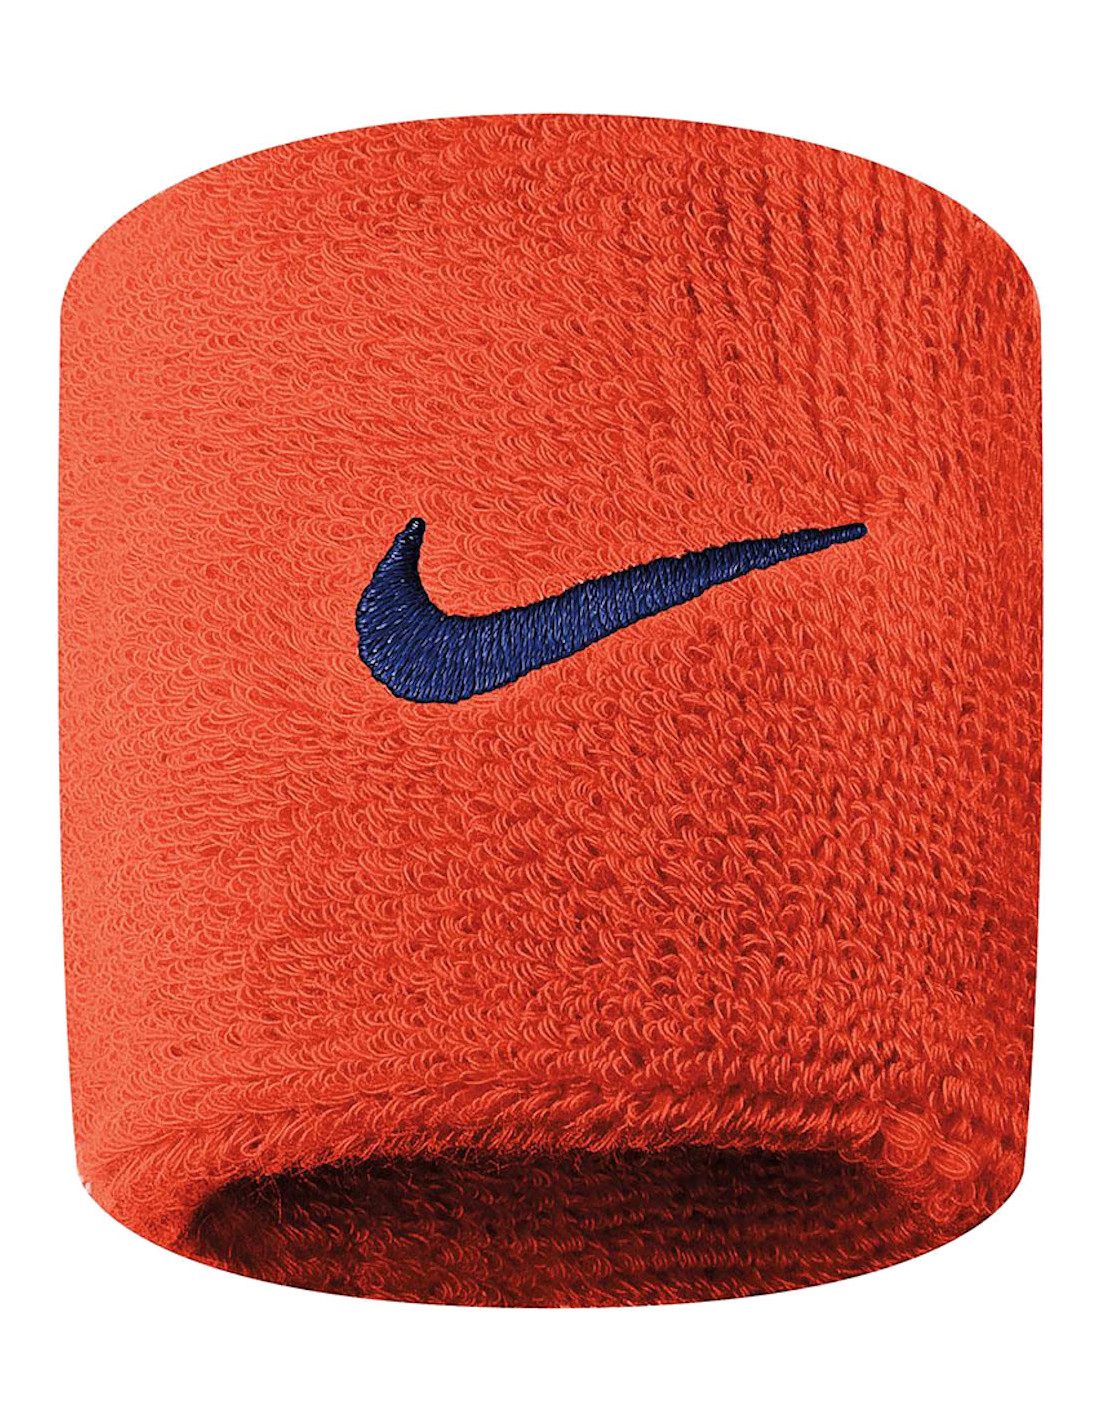 Nike Orange/dark blue